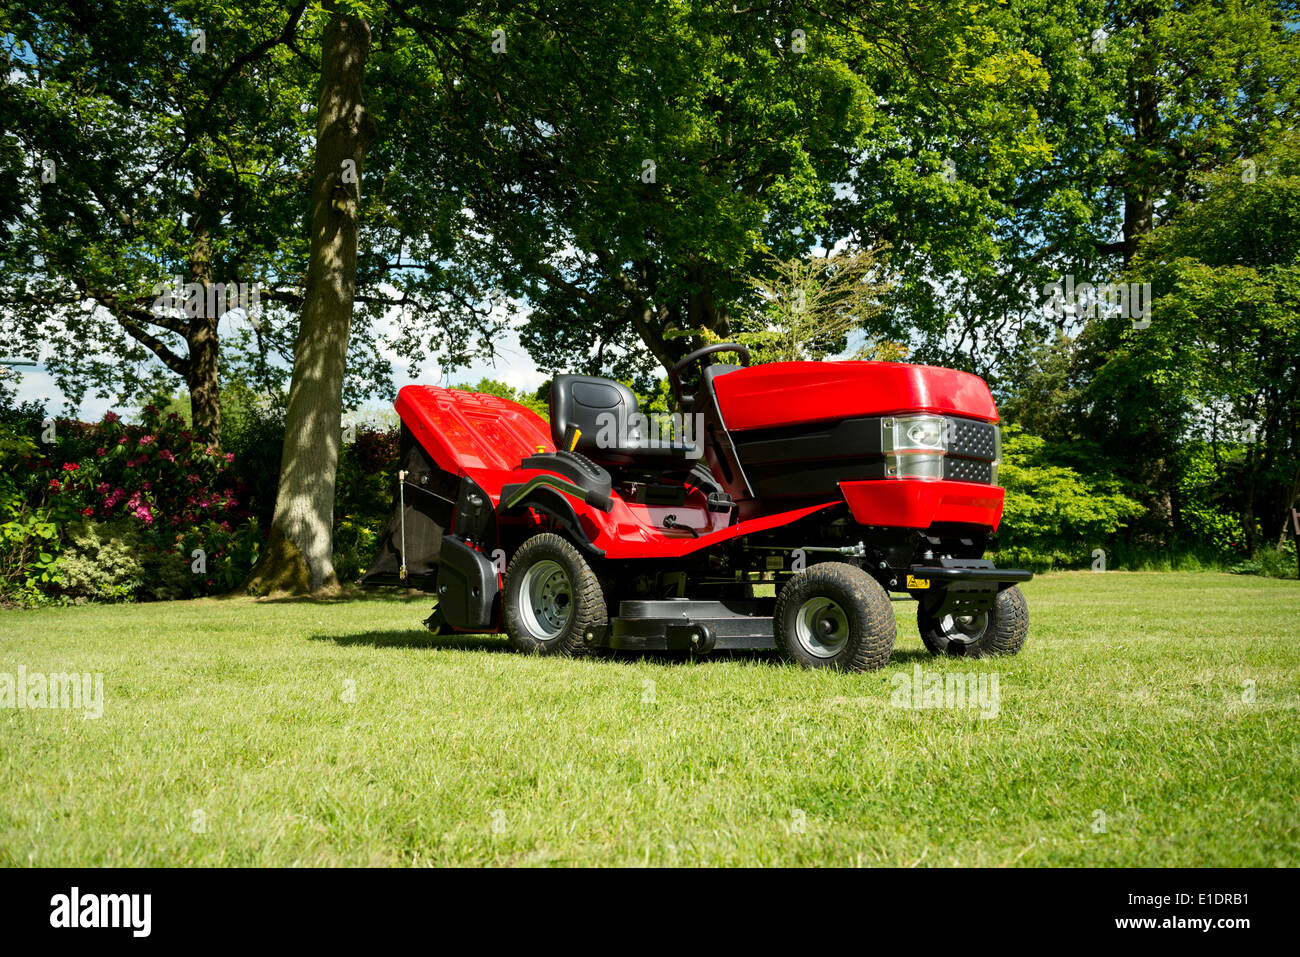 Red garden tractor, or ride on mower, in an verdant garden. Stock Photo